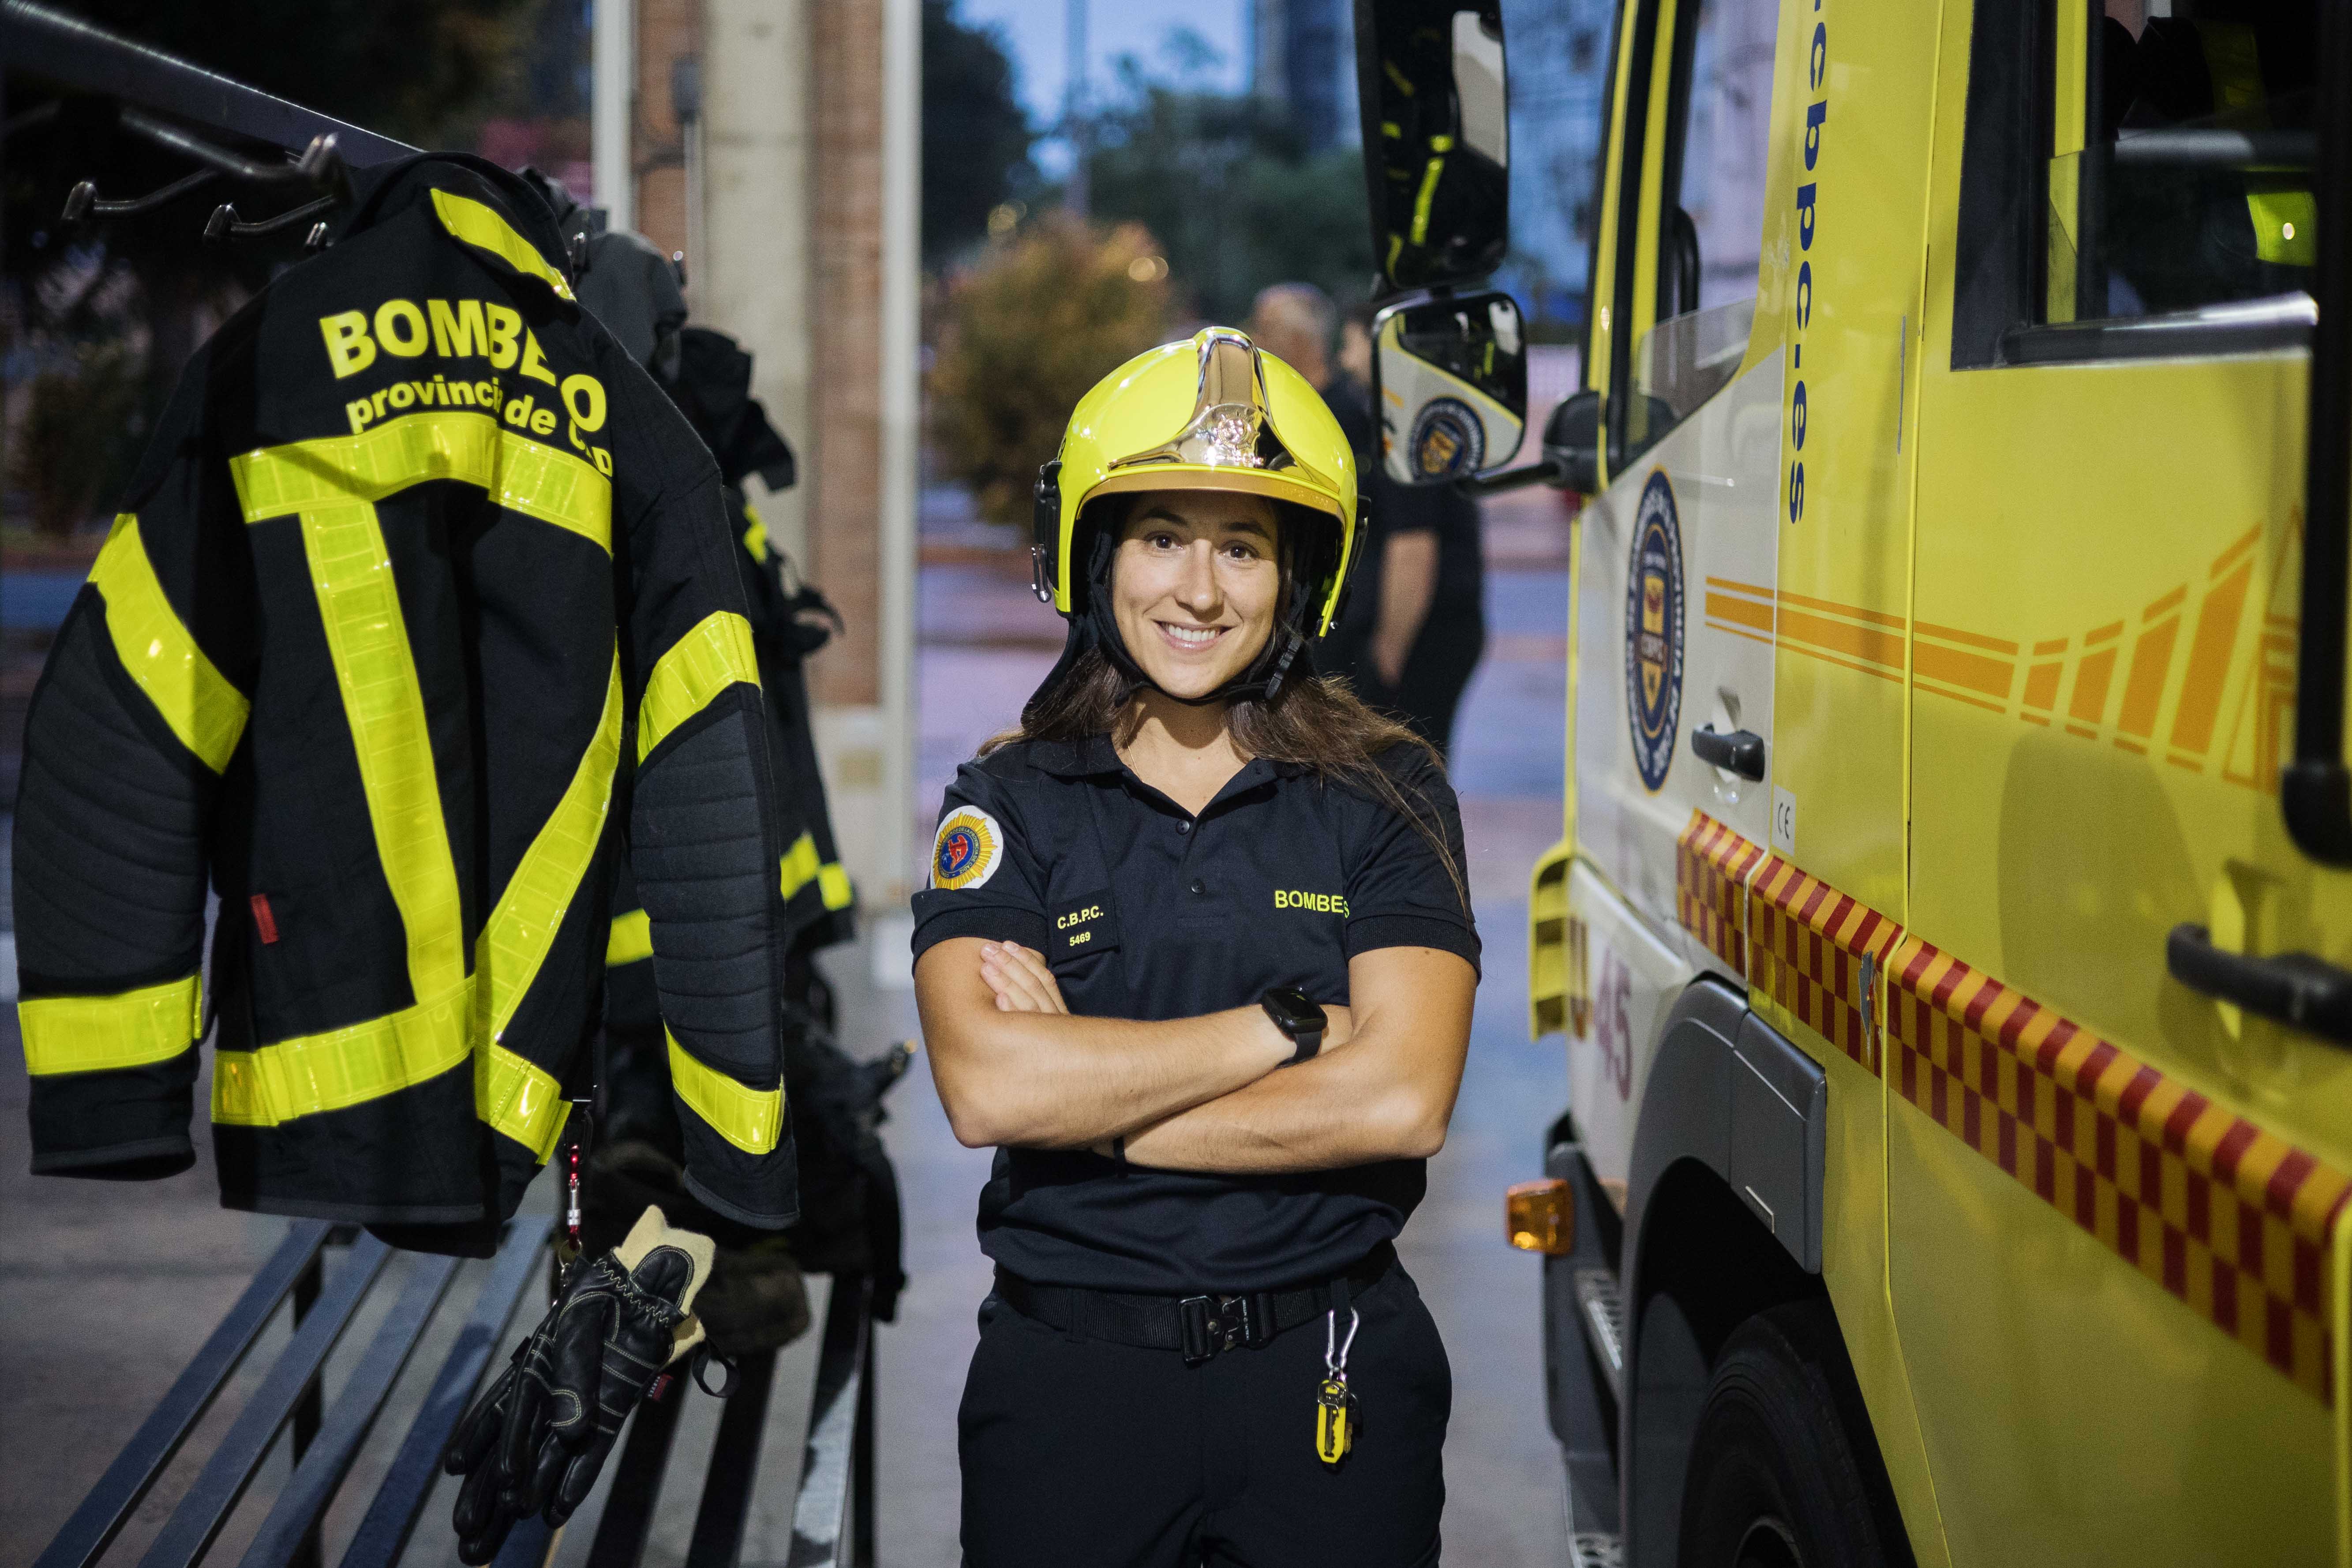 La gaditana Marta Jiménez, de 29 años,  la nueva bombera del parque de Jerez.